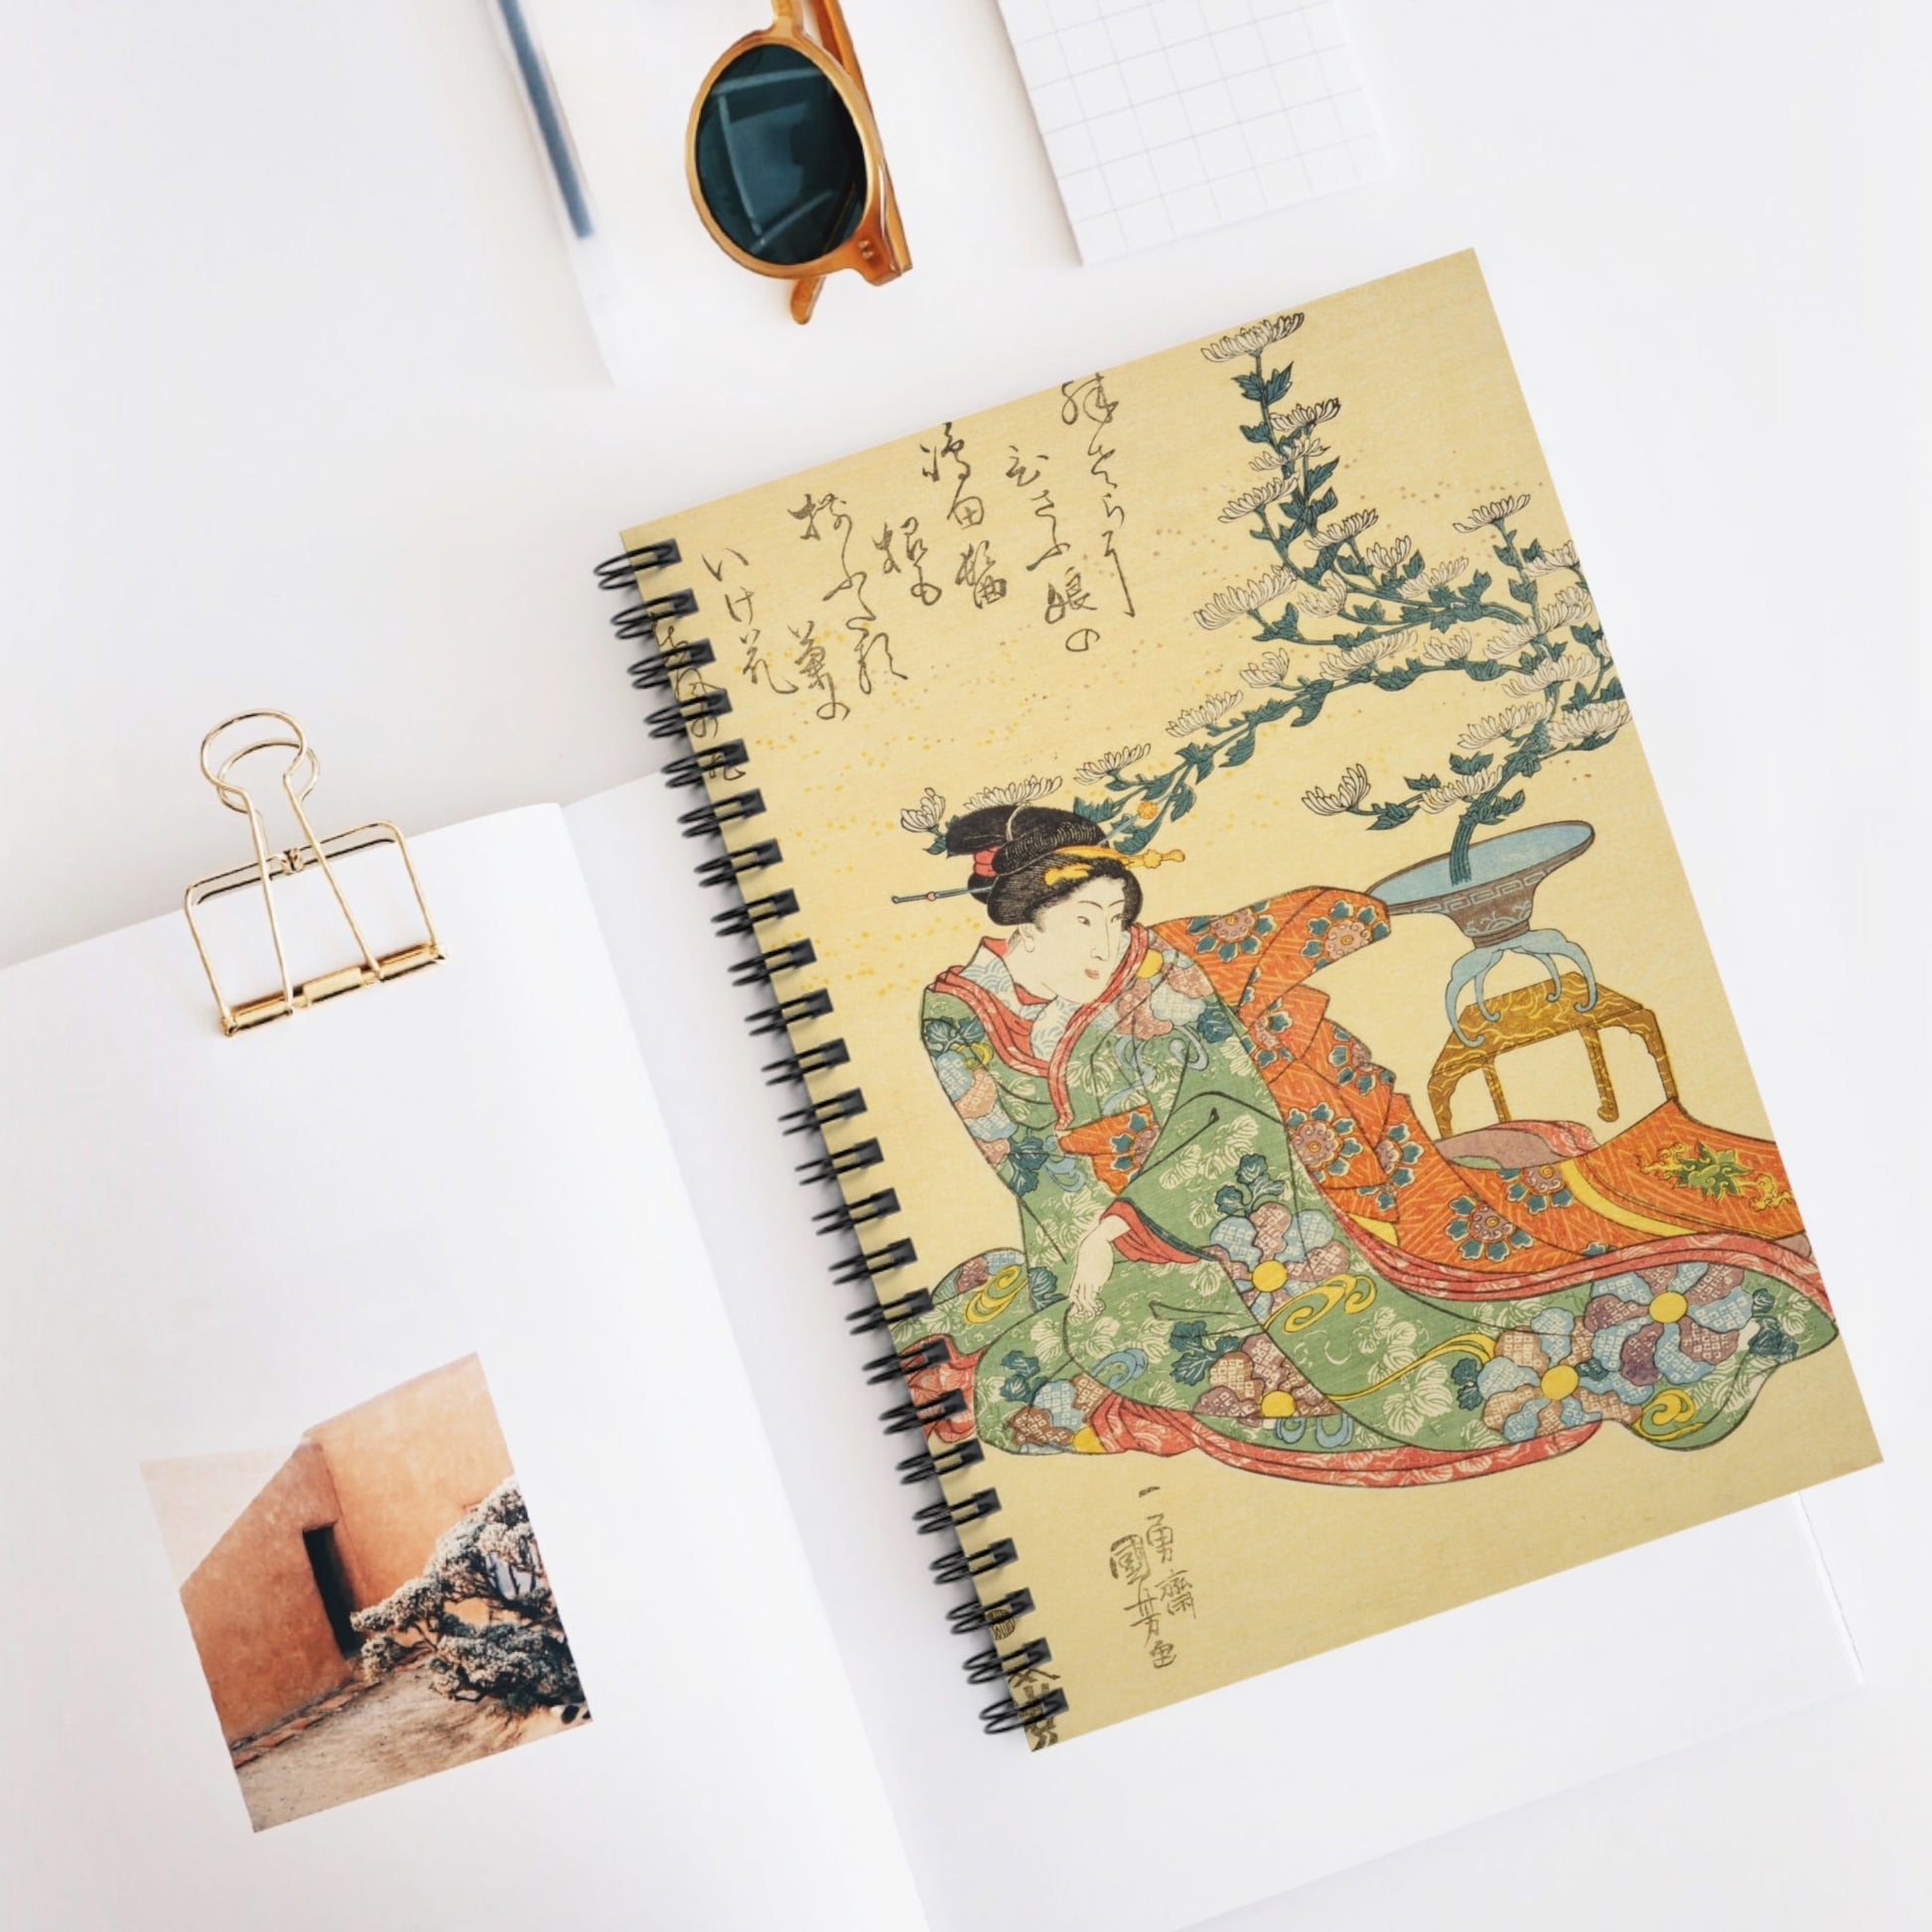 Japanese Aesthetic Spiral Notebook Displayed on Desk